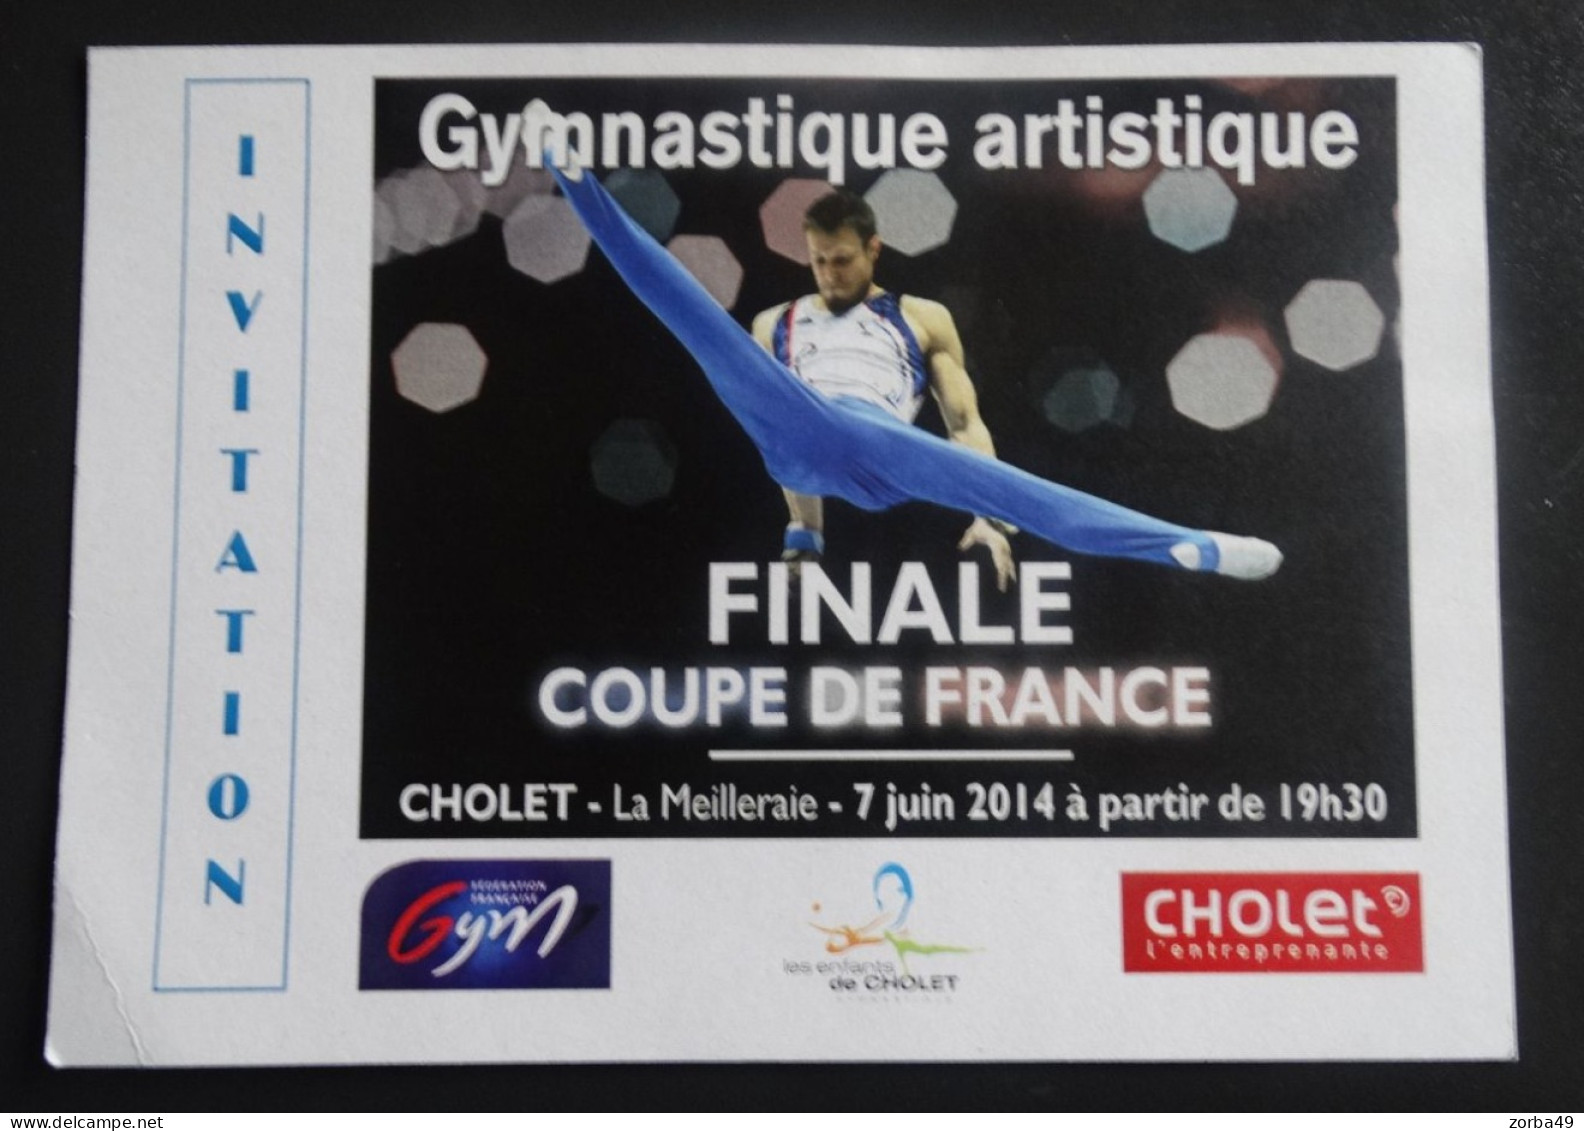 CHOLET Invitation Finale Coupe De France De Gymnastique Artistique 2014 - Ginnastica